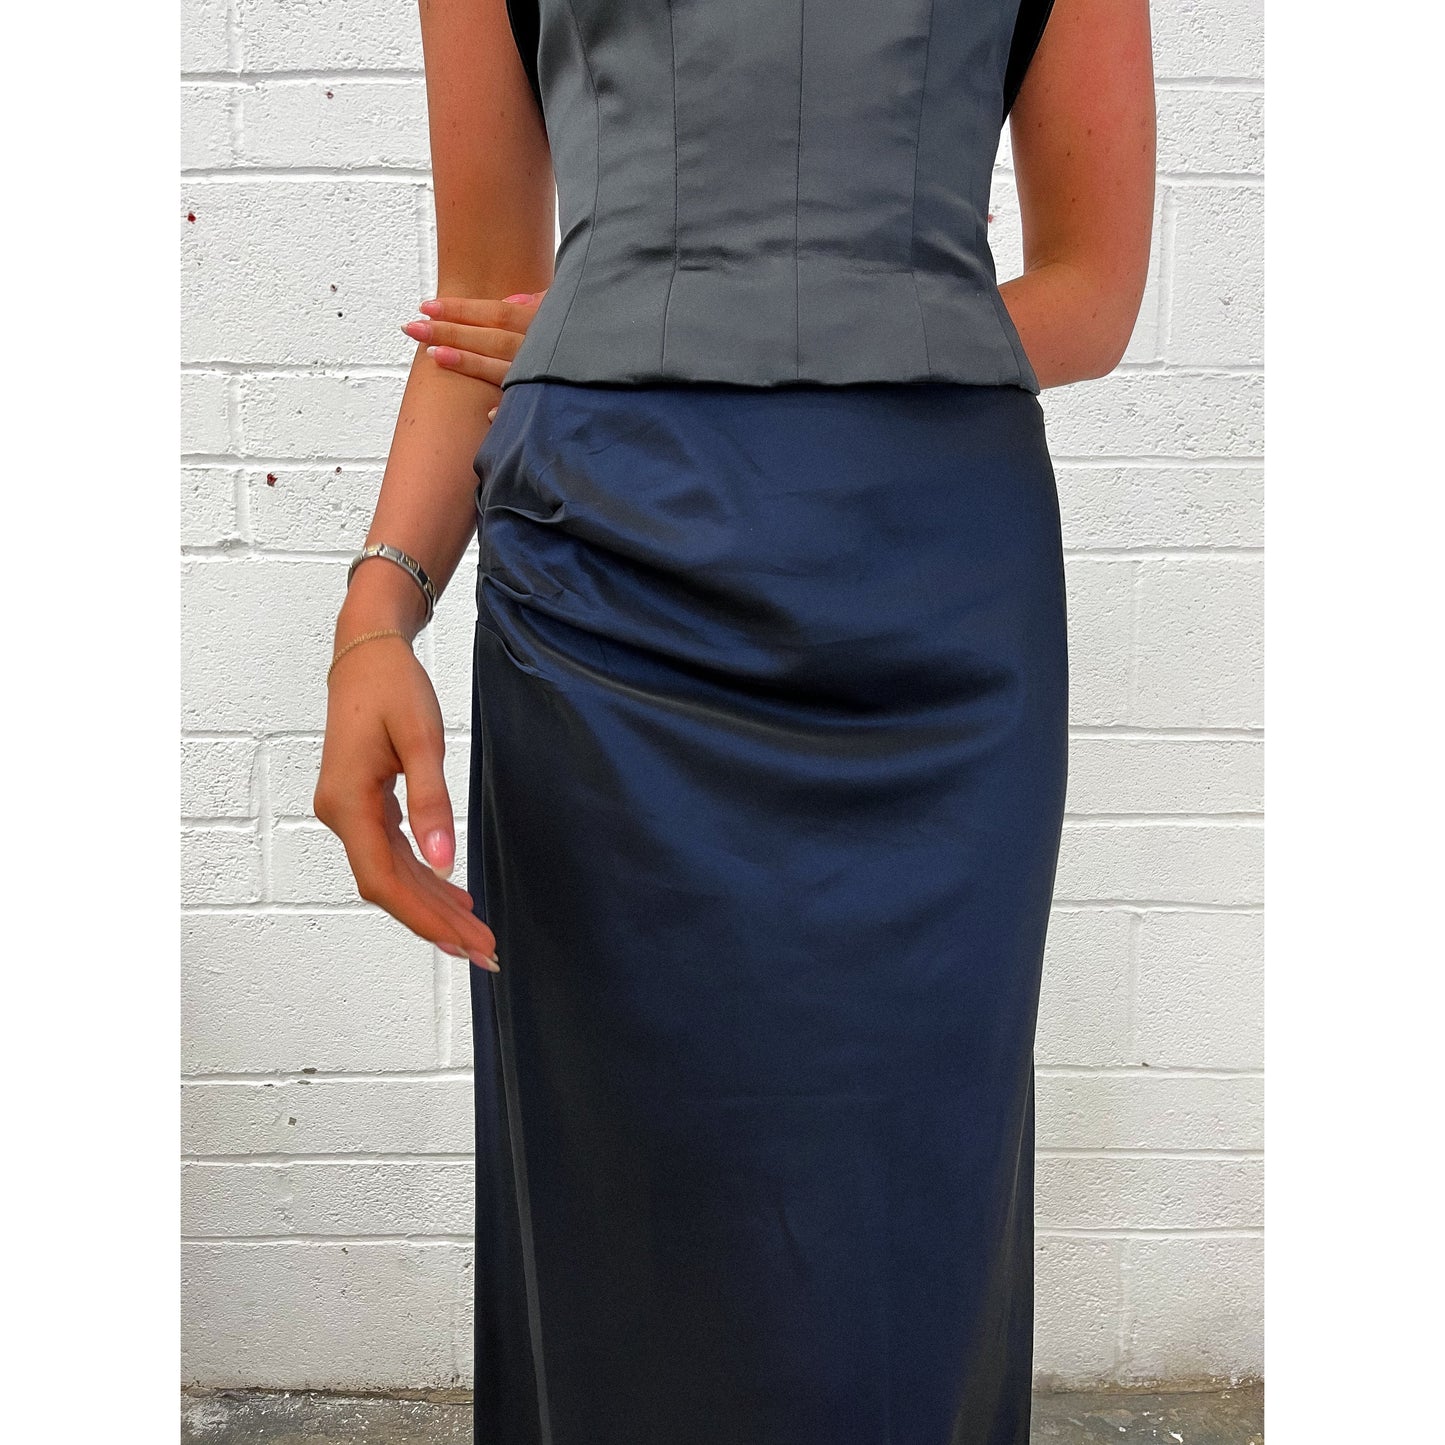 GOTTFRIED Couture Navy Skirt UK 8 - 10